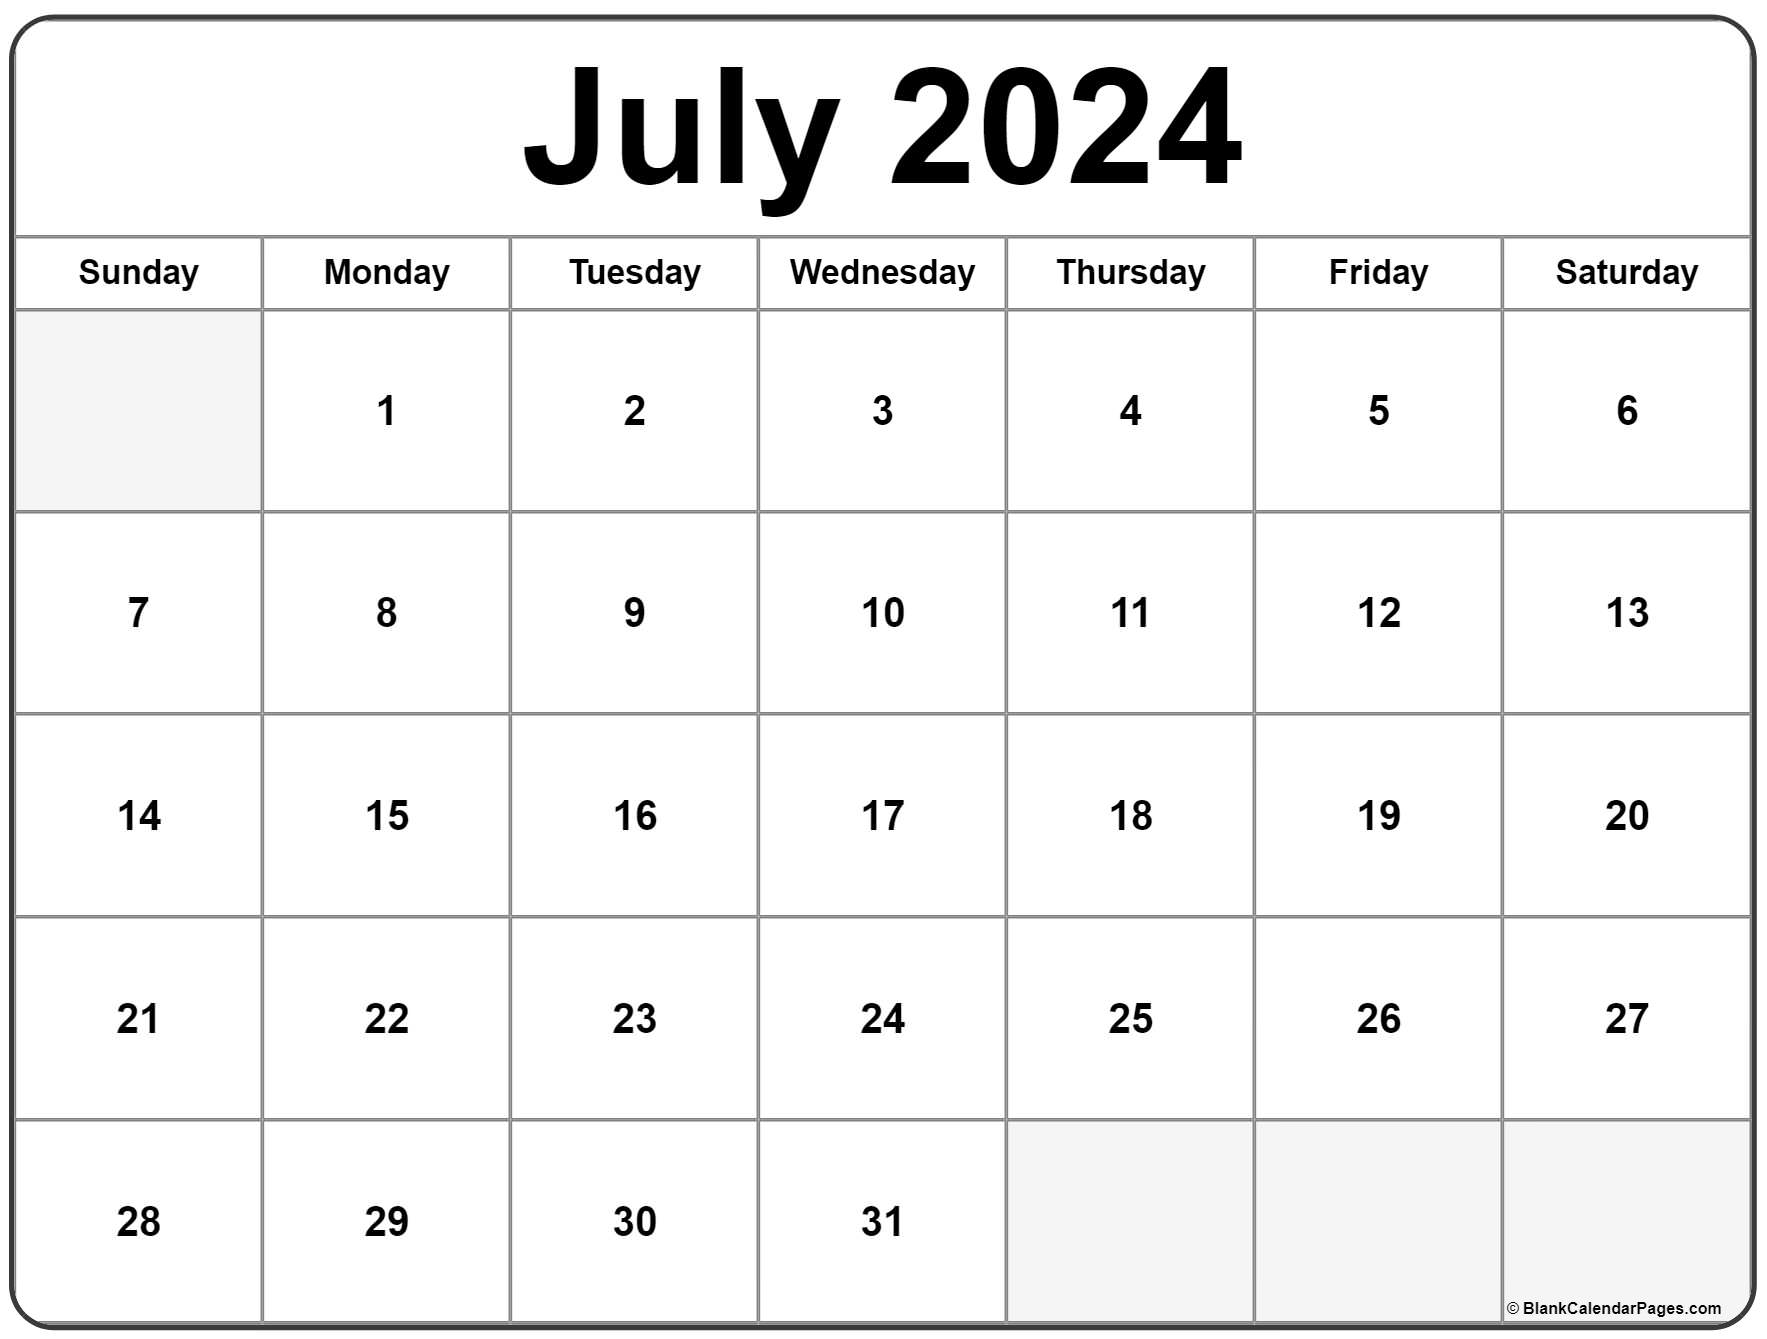 July 2023 Calendar Printable Free - Printable Calendar 2023